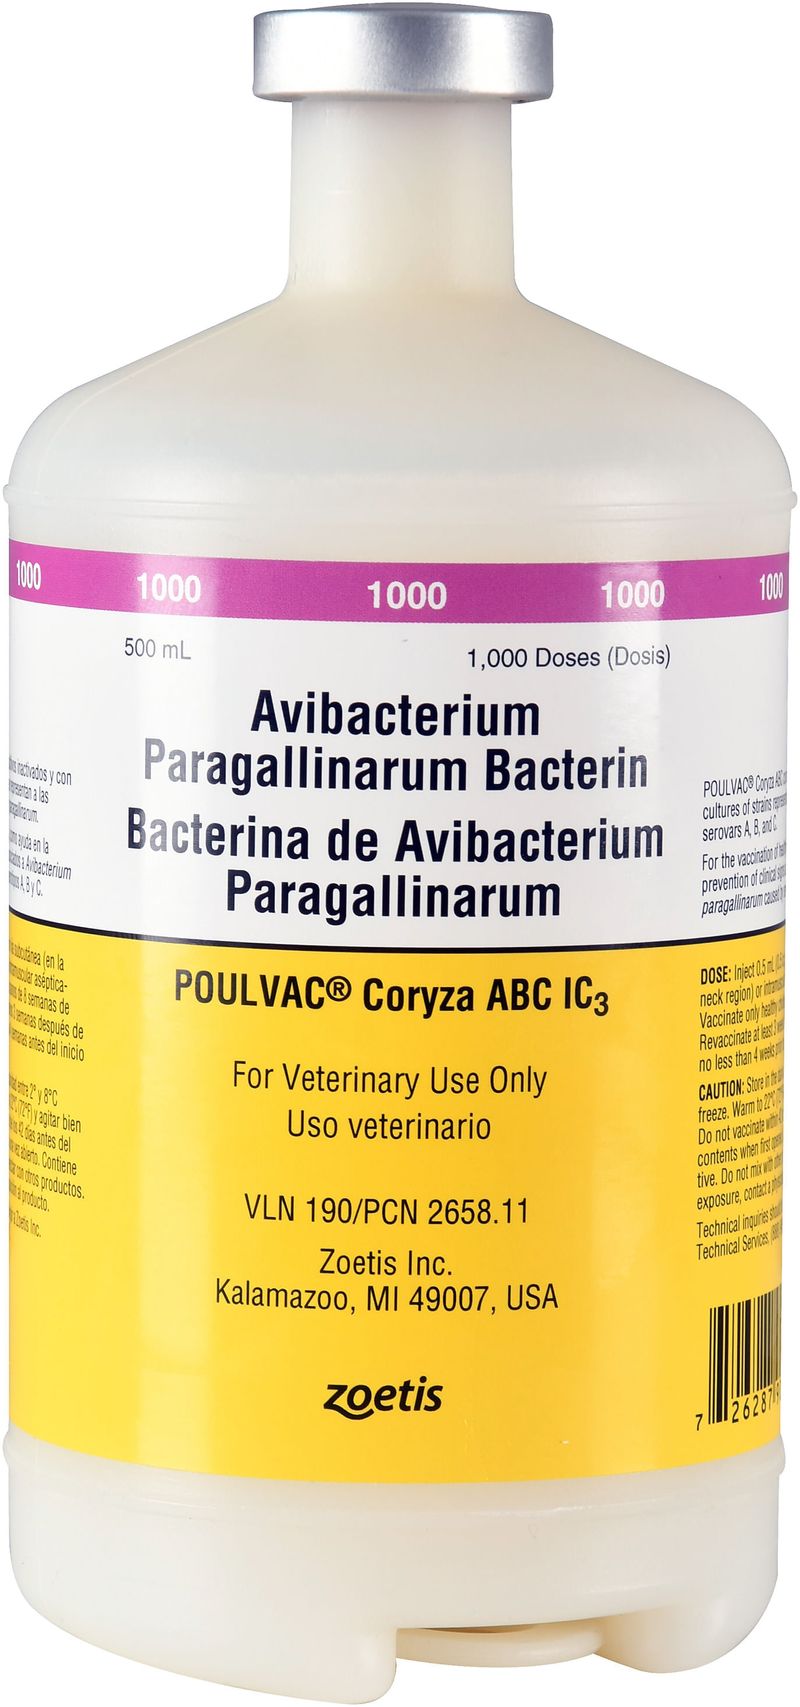 POULVAC®-Coryza-ABC-IC3--Haemophilus-Paragallinarum-Bacterin--500-mL